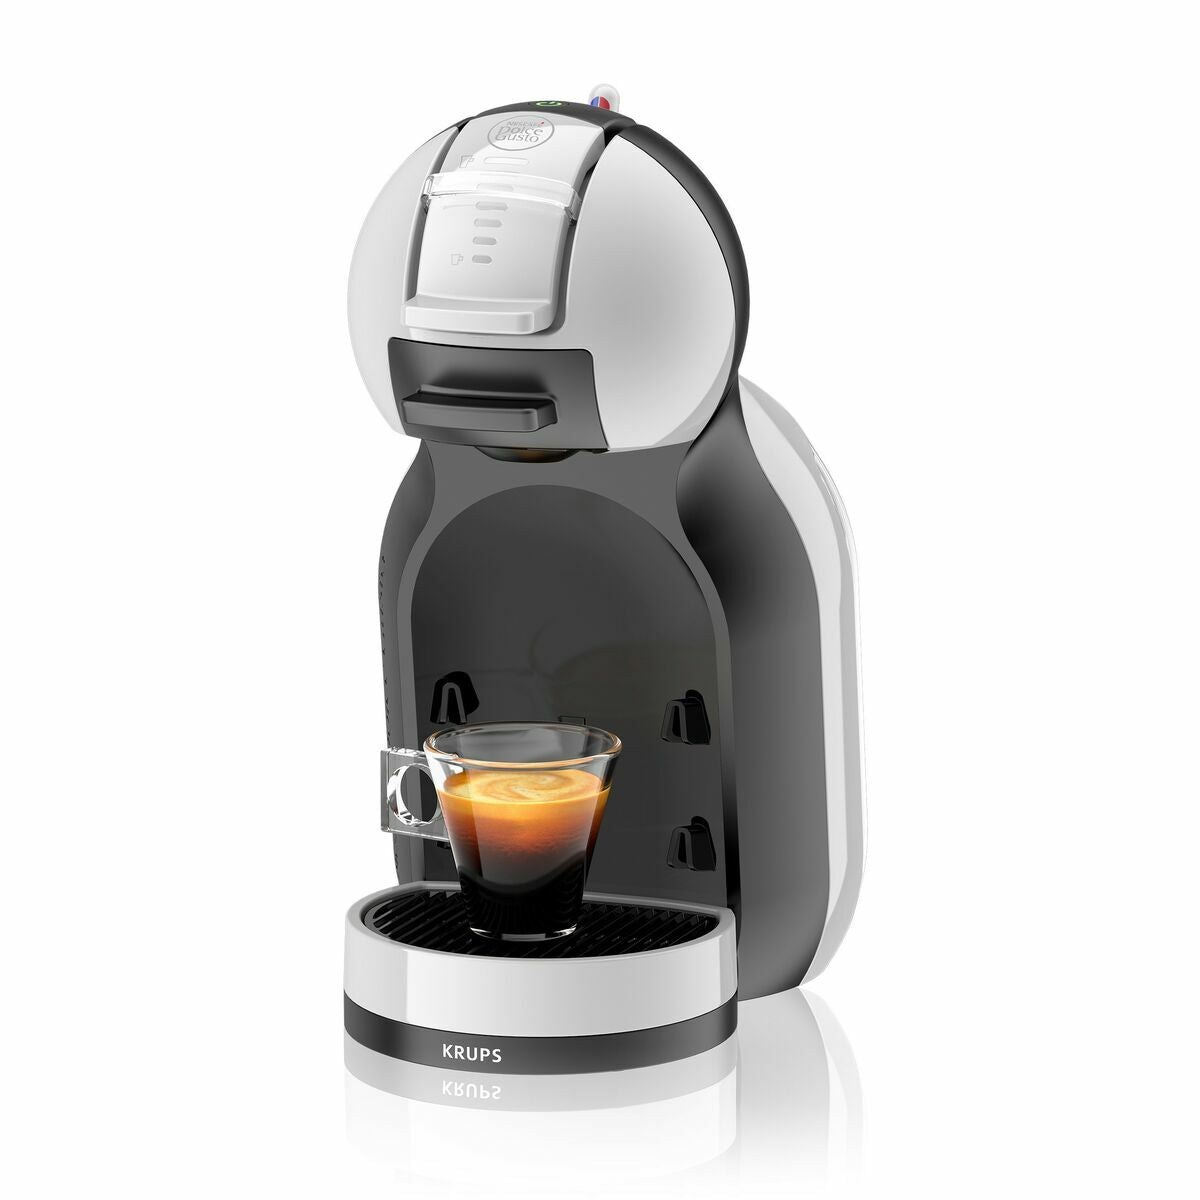 Kapsel-Kaffeemaschine Krups Grau 1500 W 800 ml - CA International 